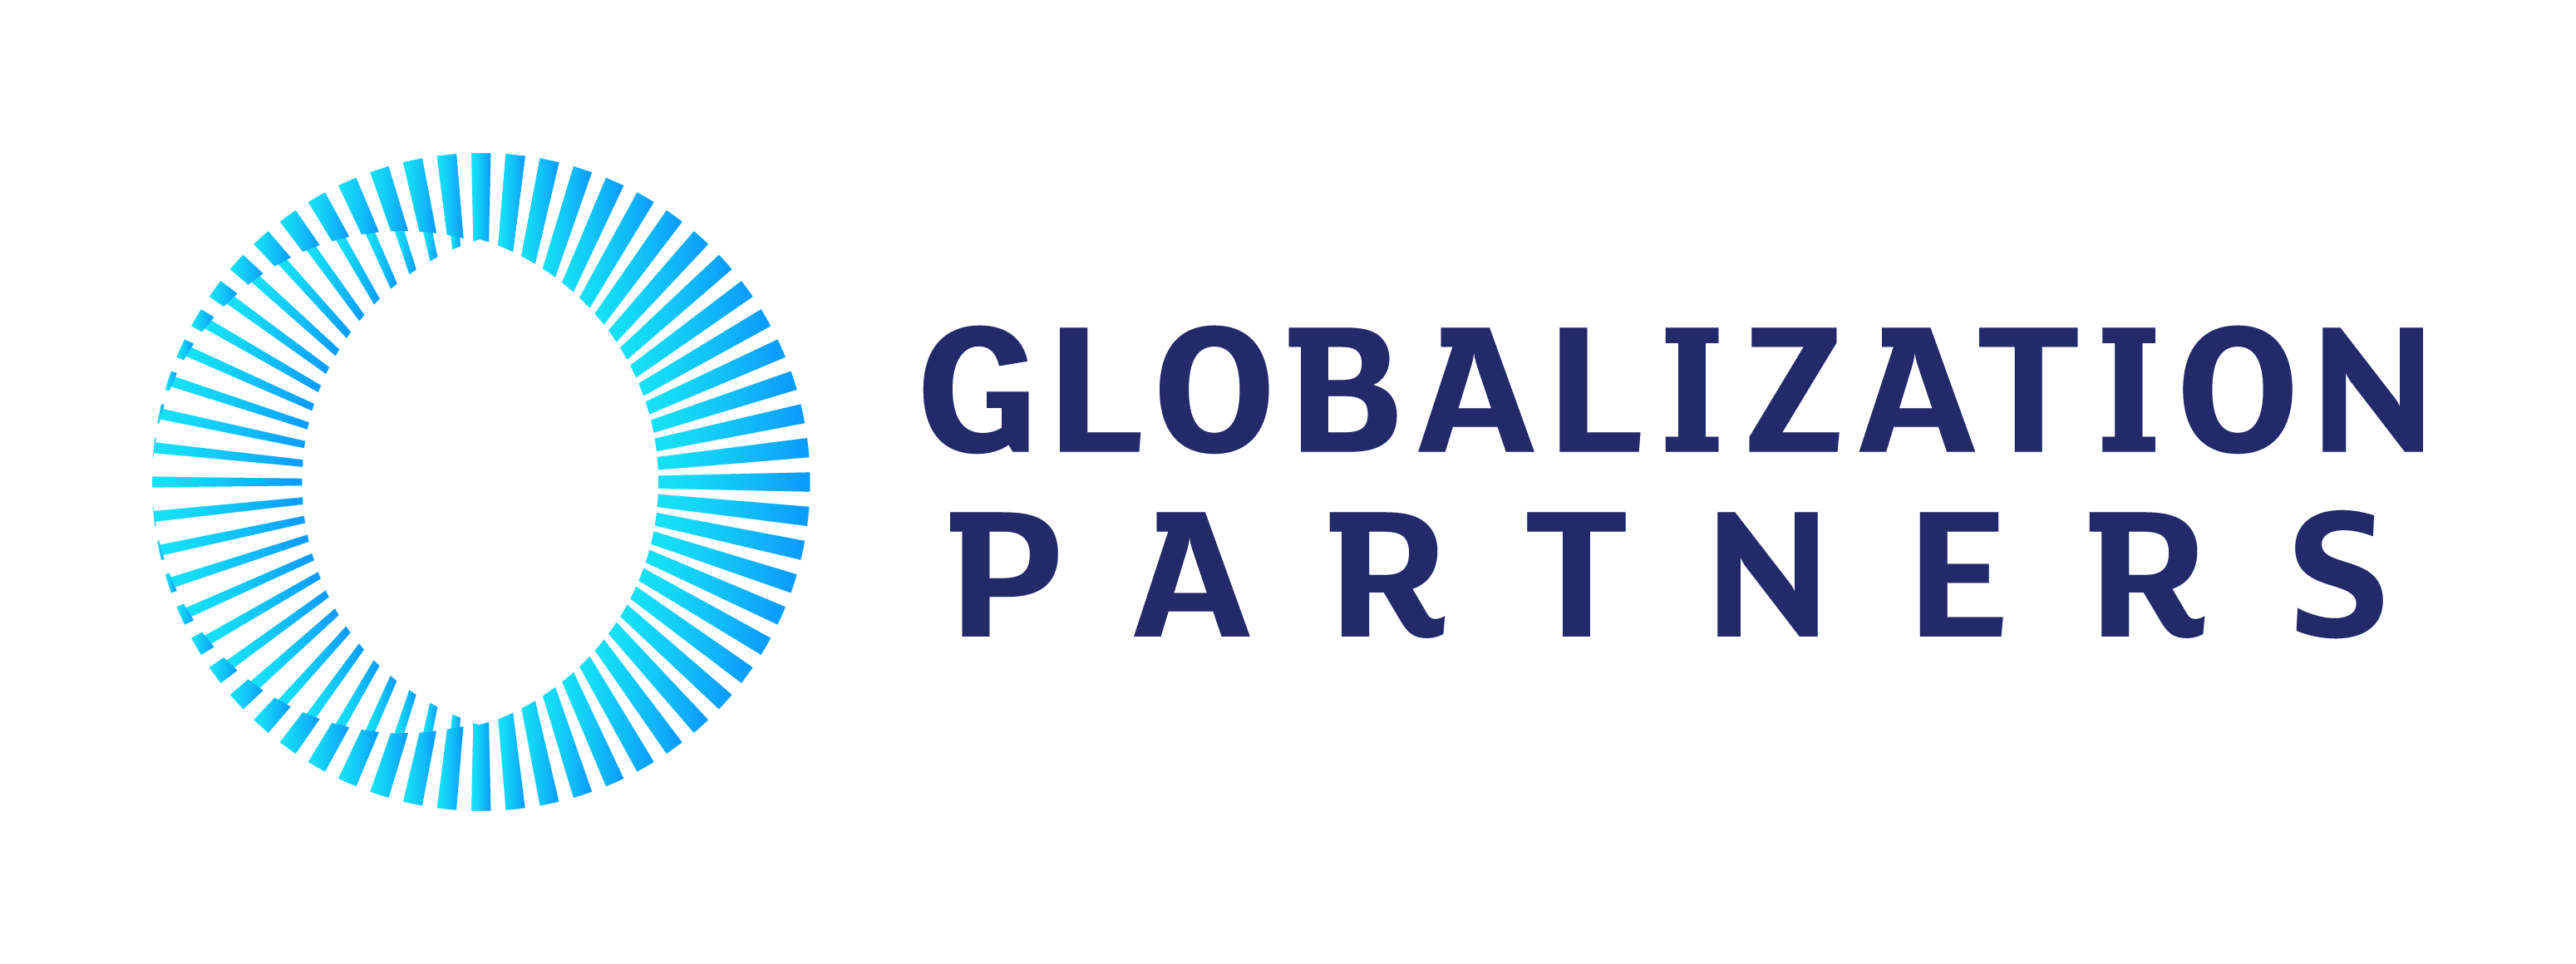 Globalization Partners Logo Horizontal Blue